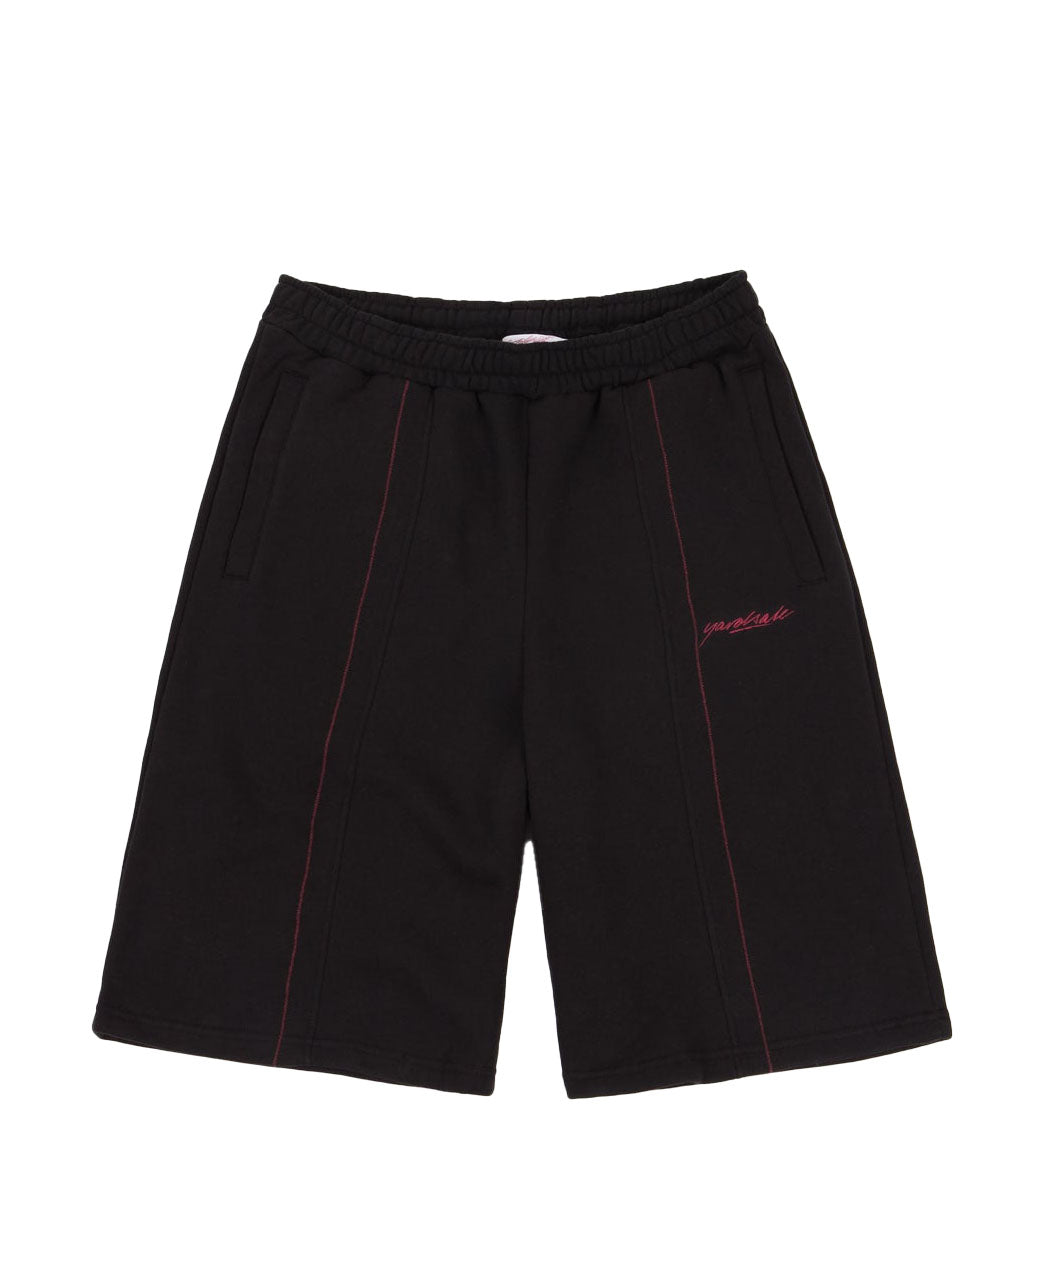 Yardsale Tijuana Sweatshorts Black/Red - XL